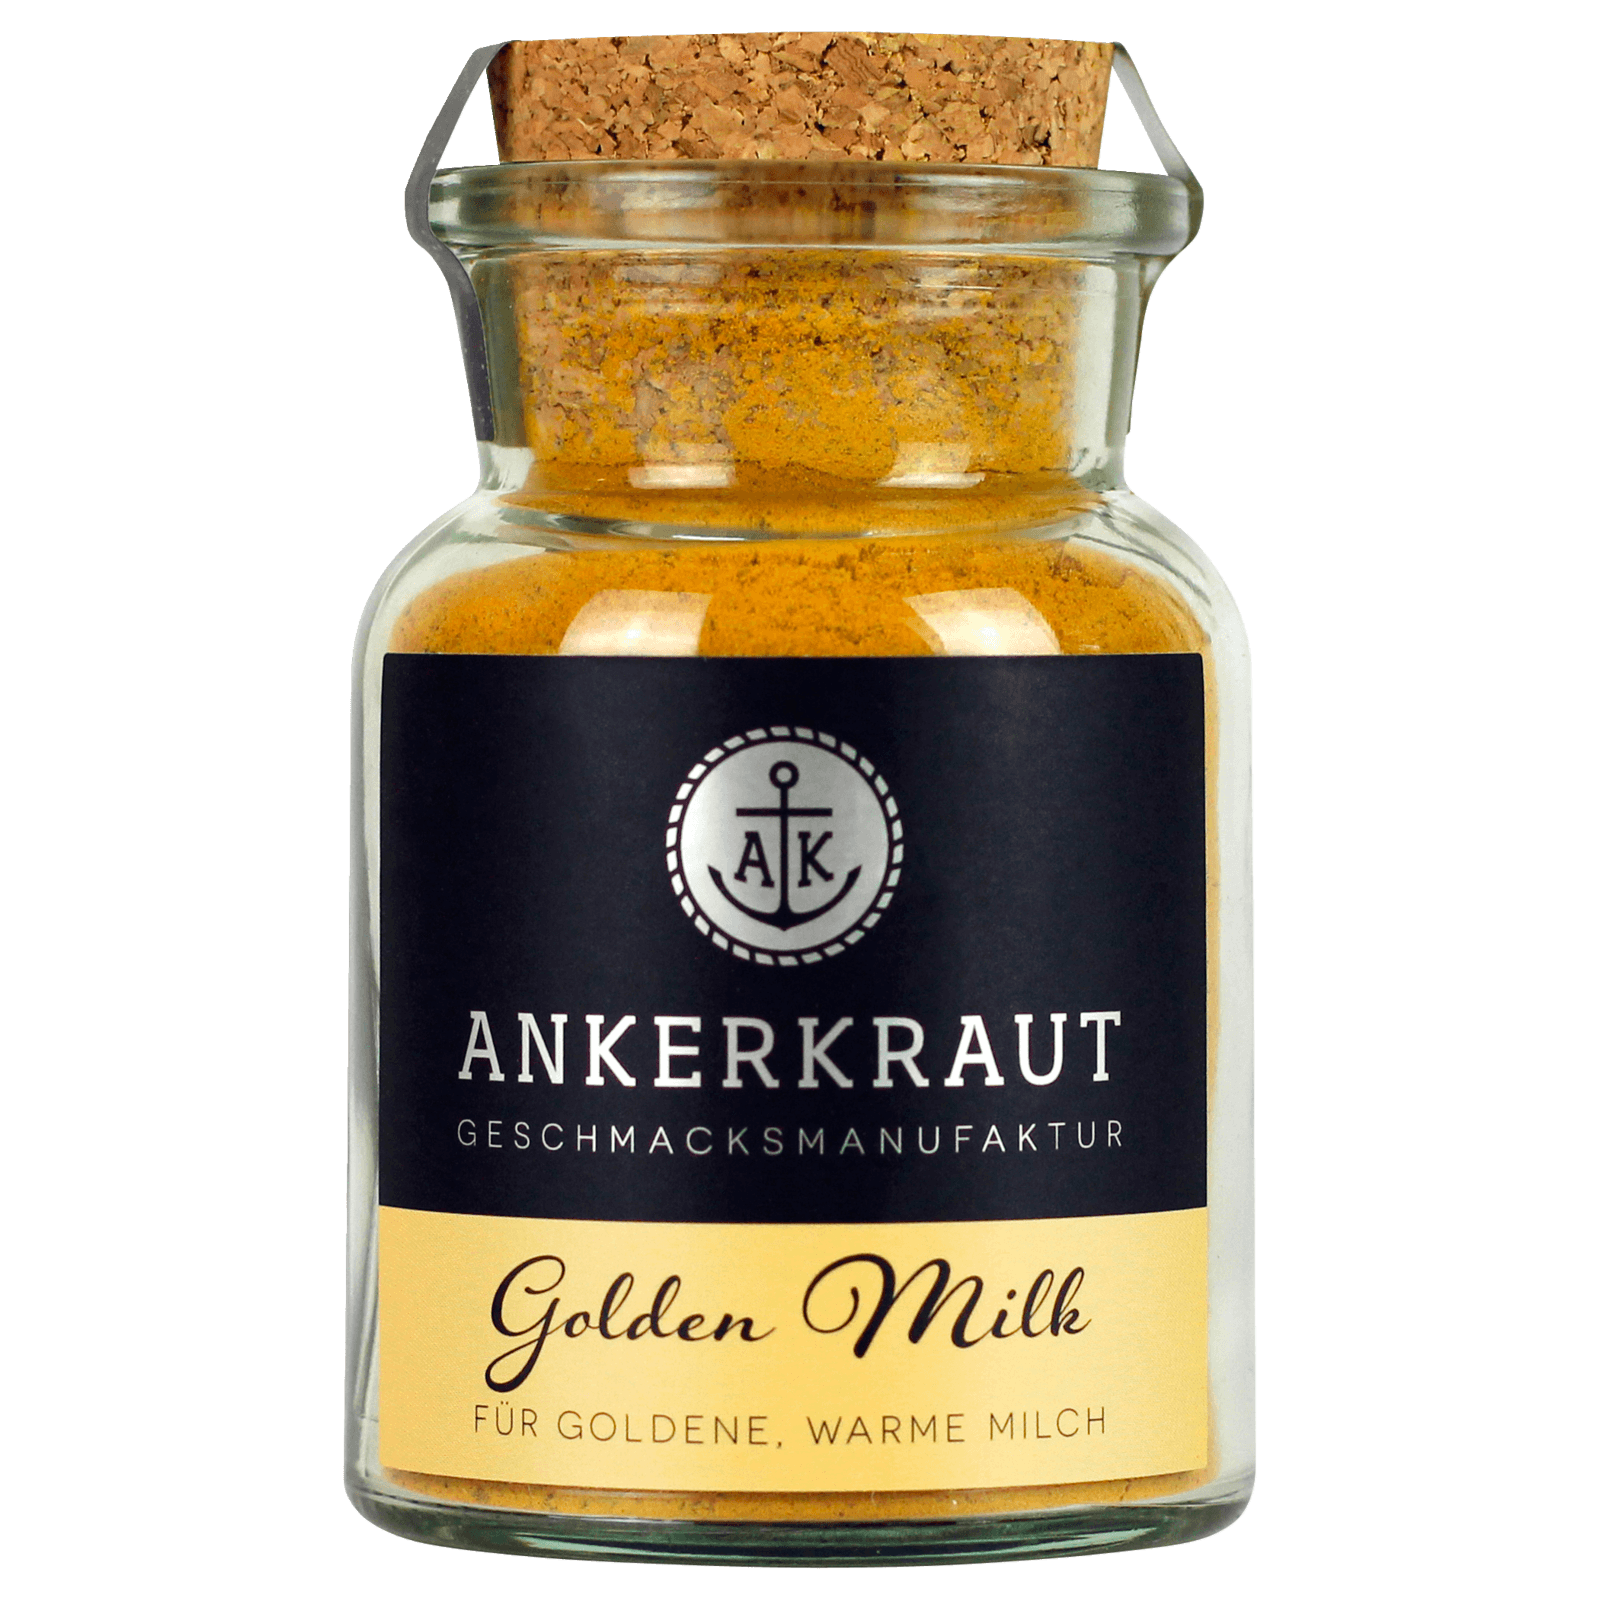 Ankerkraut Golden Milk 75g bei REWE online bestellen!